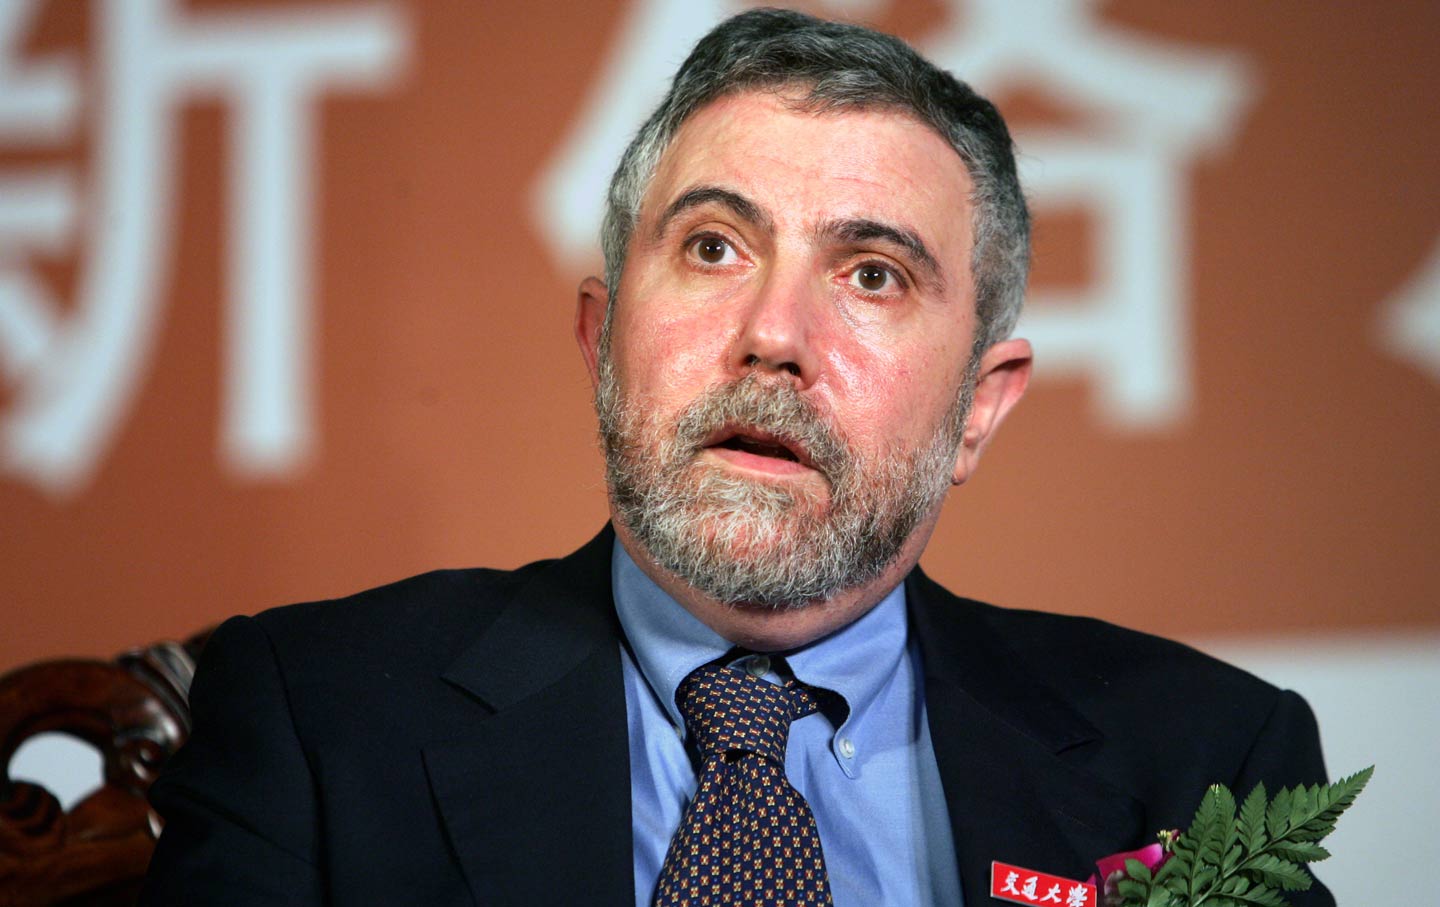 krugman conference hall